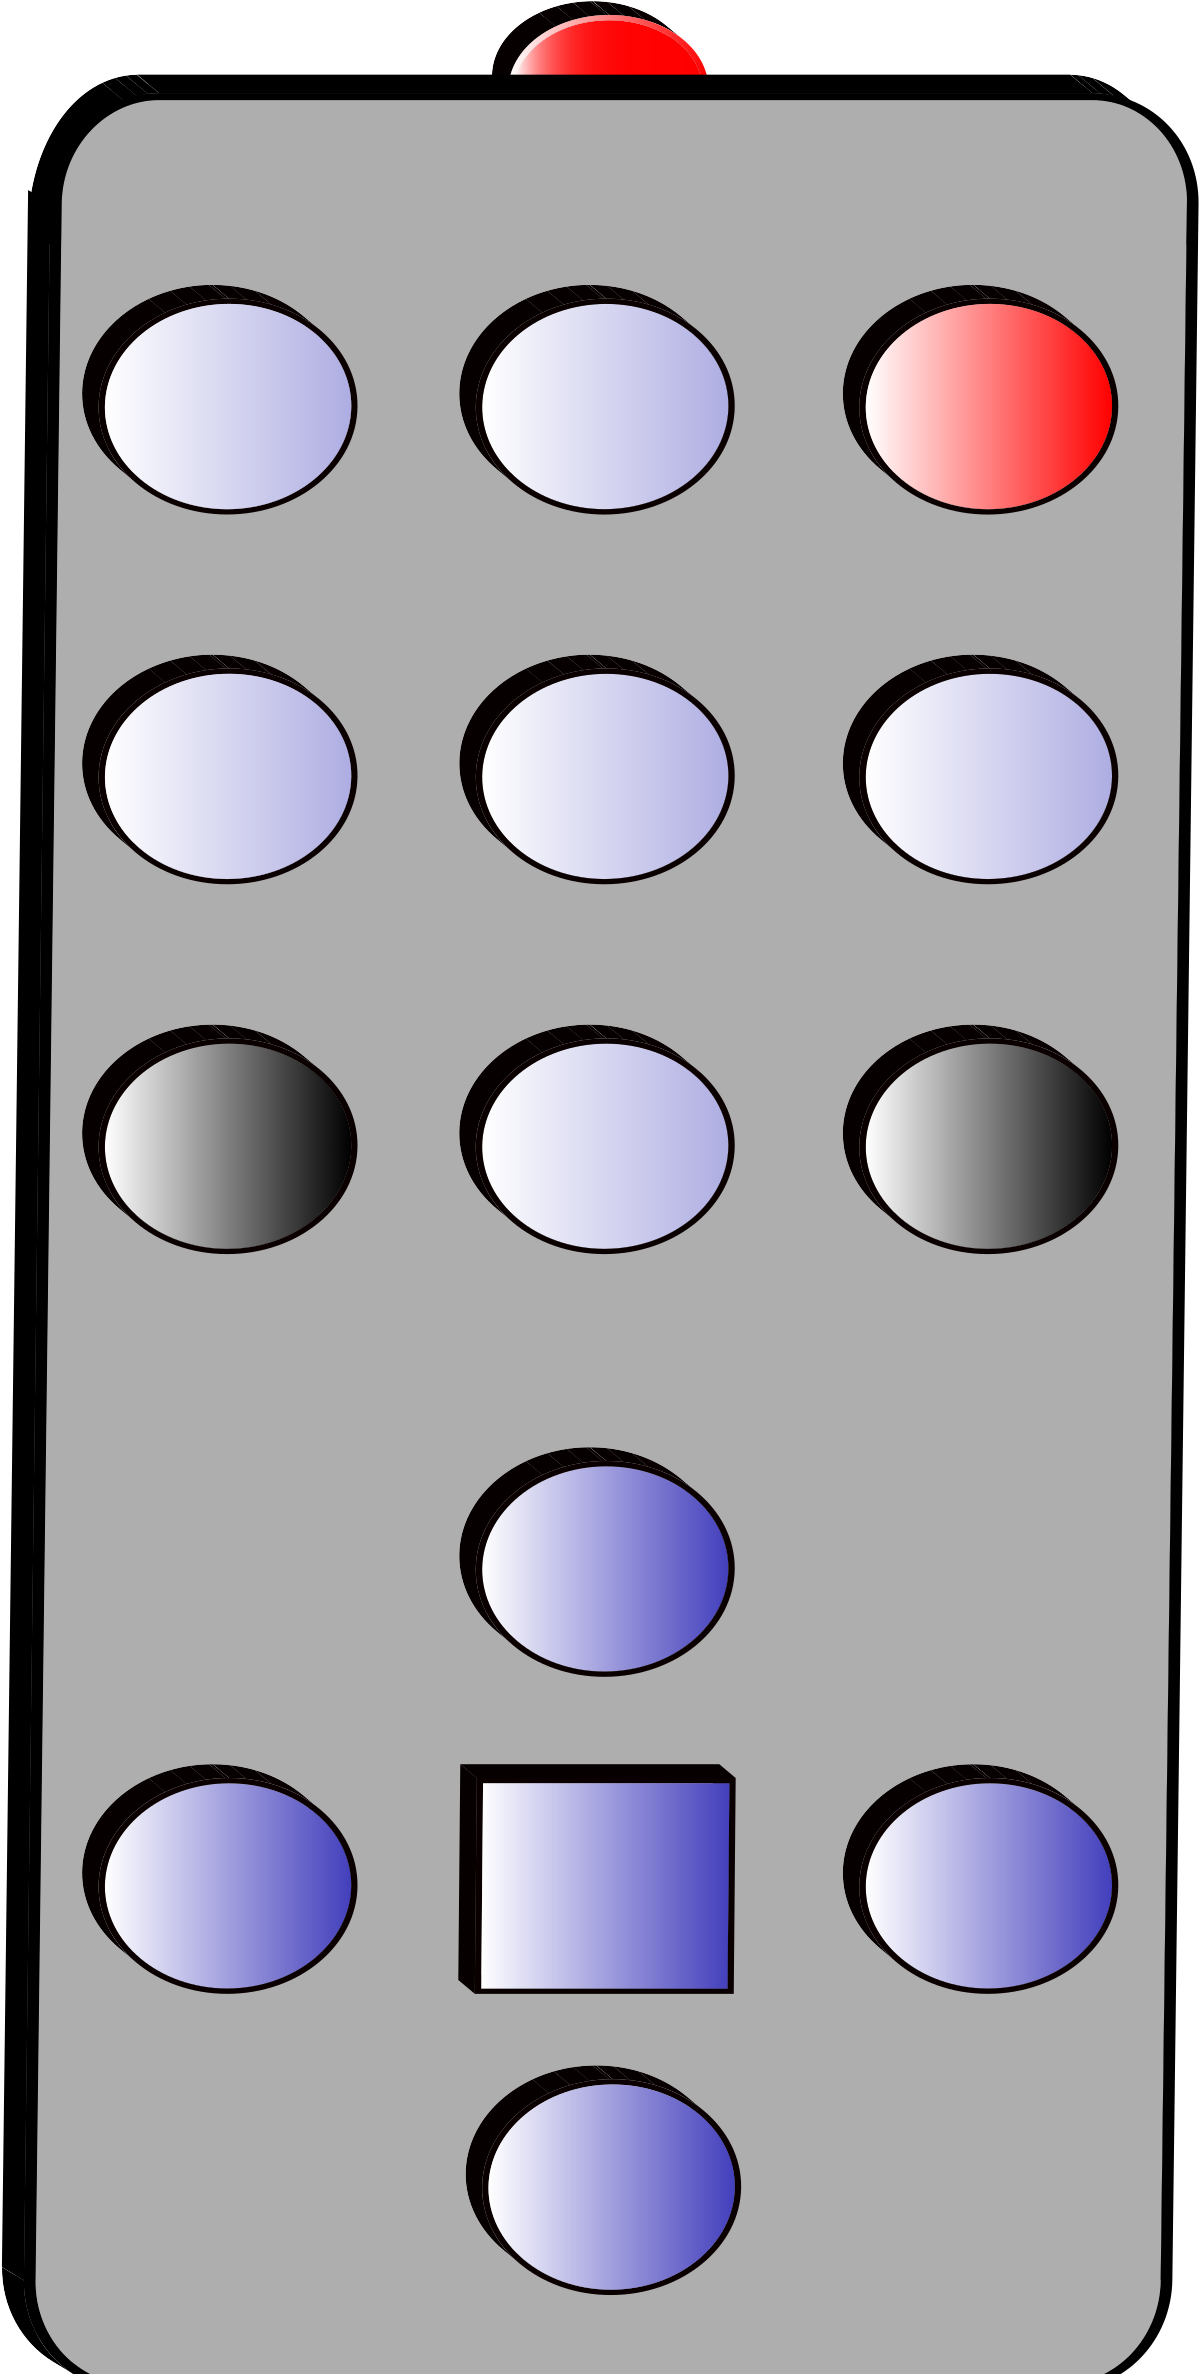 Remote Control - Remote Control Clipart Transparent (2549x2400)